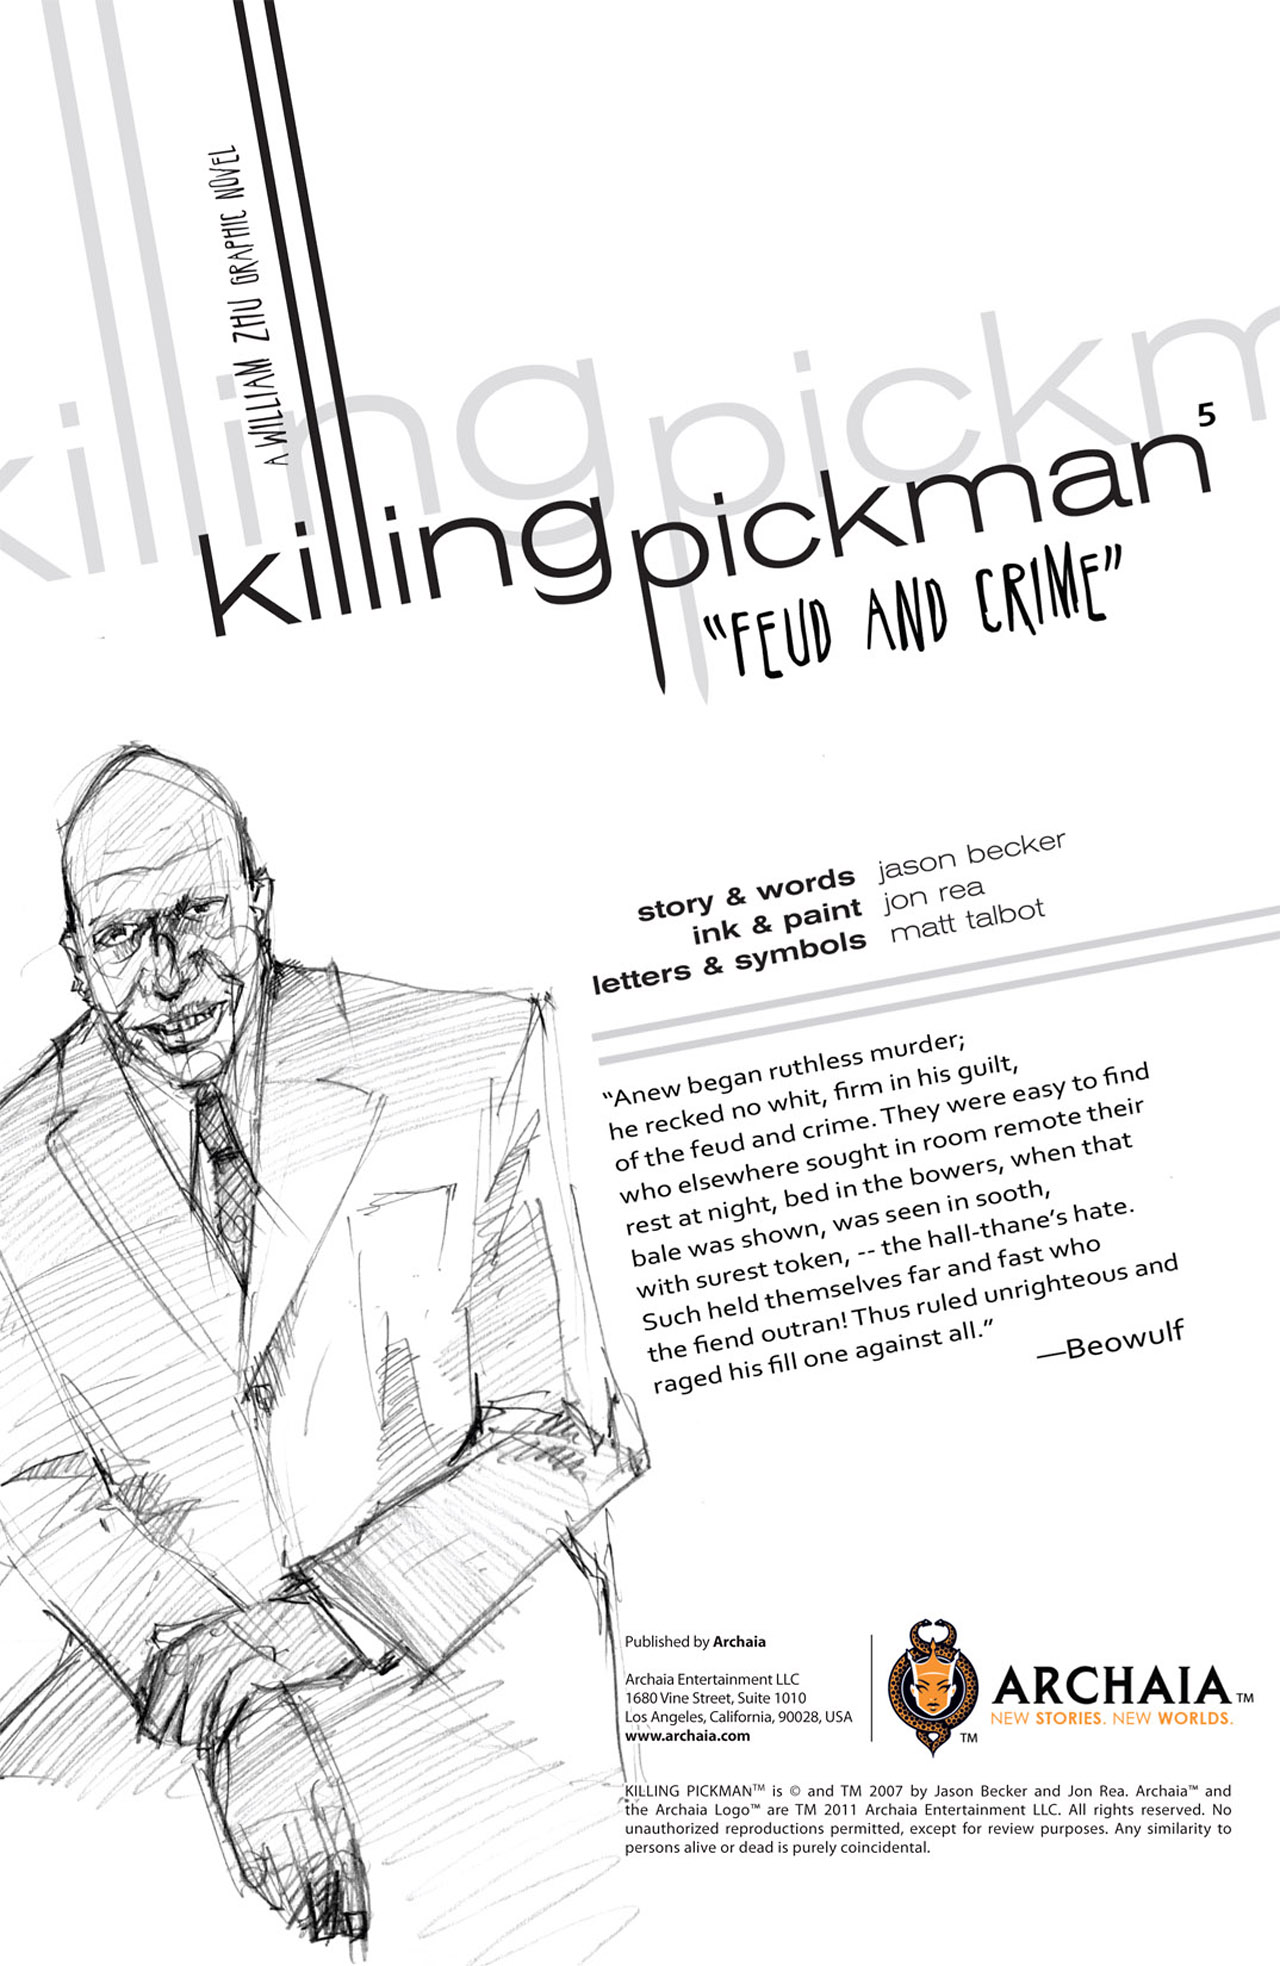 Killing Pickman 5 - Feud and Crime